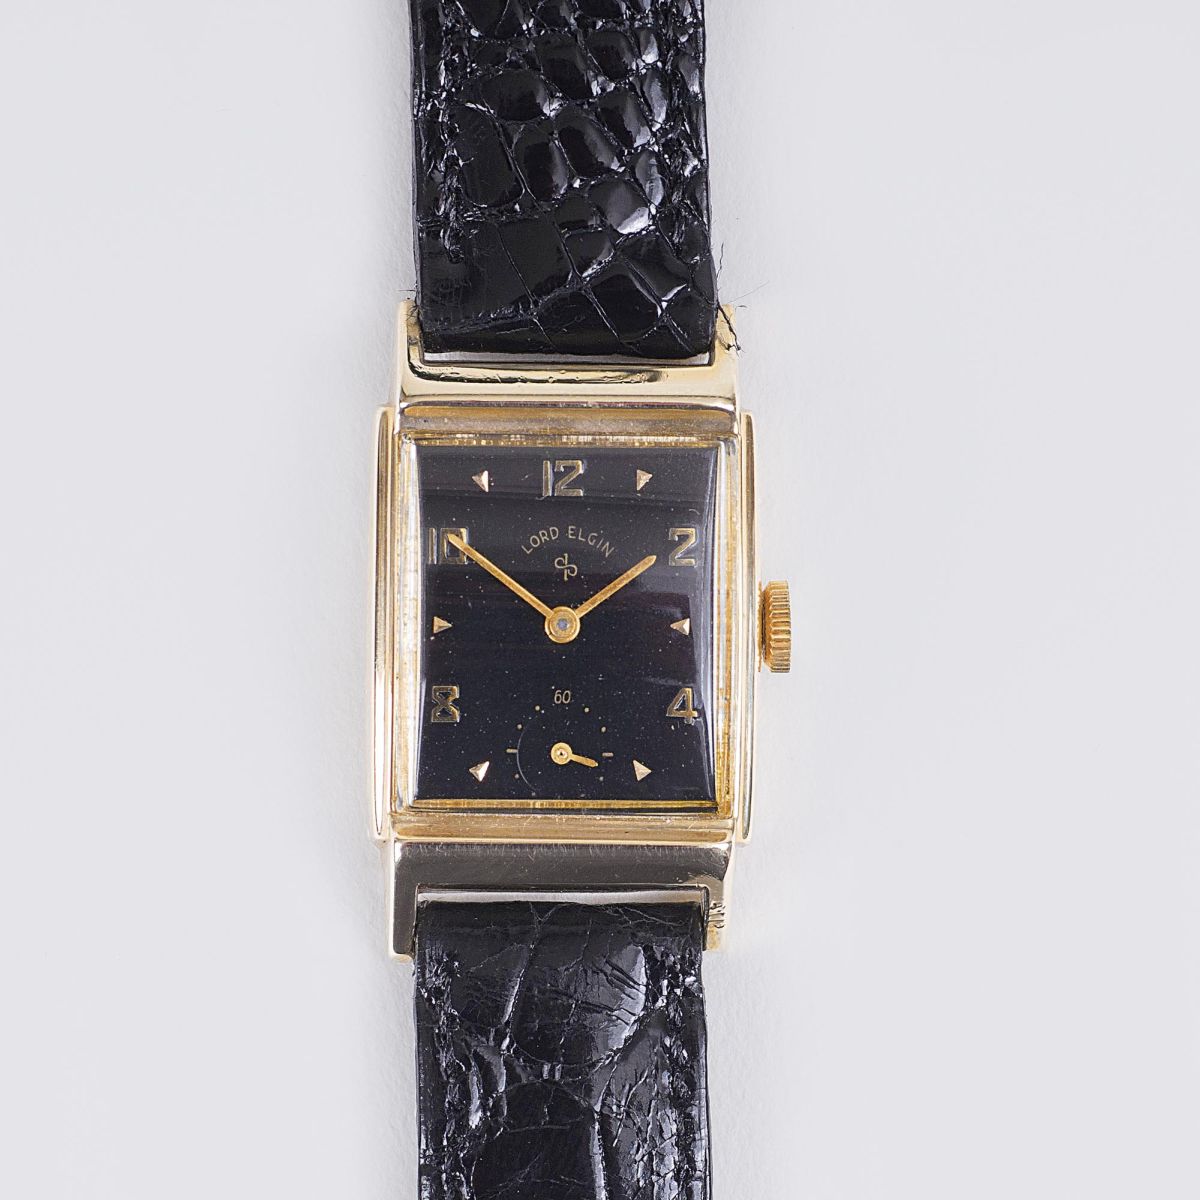 A Vintage Ladie's Wristwatch